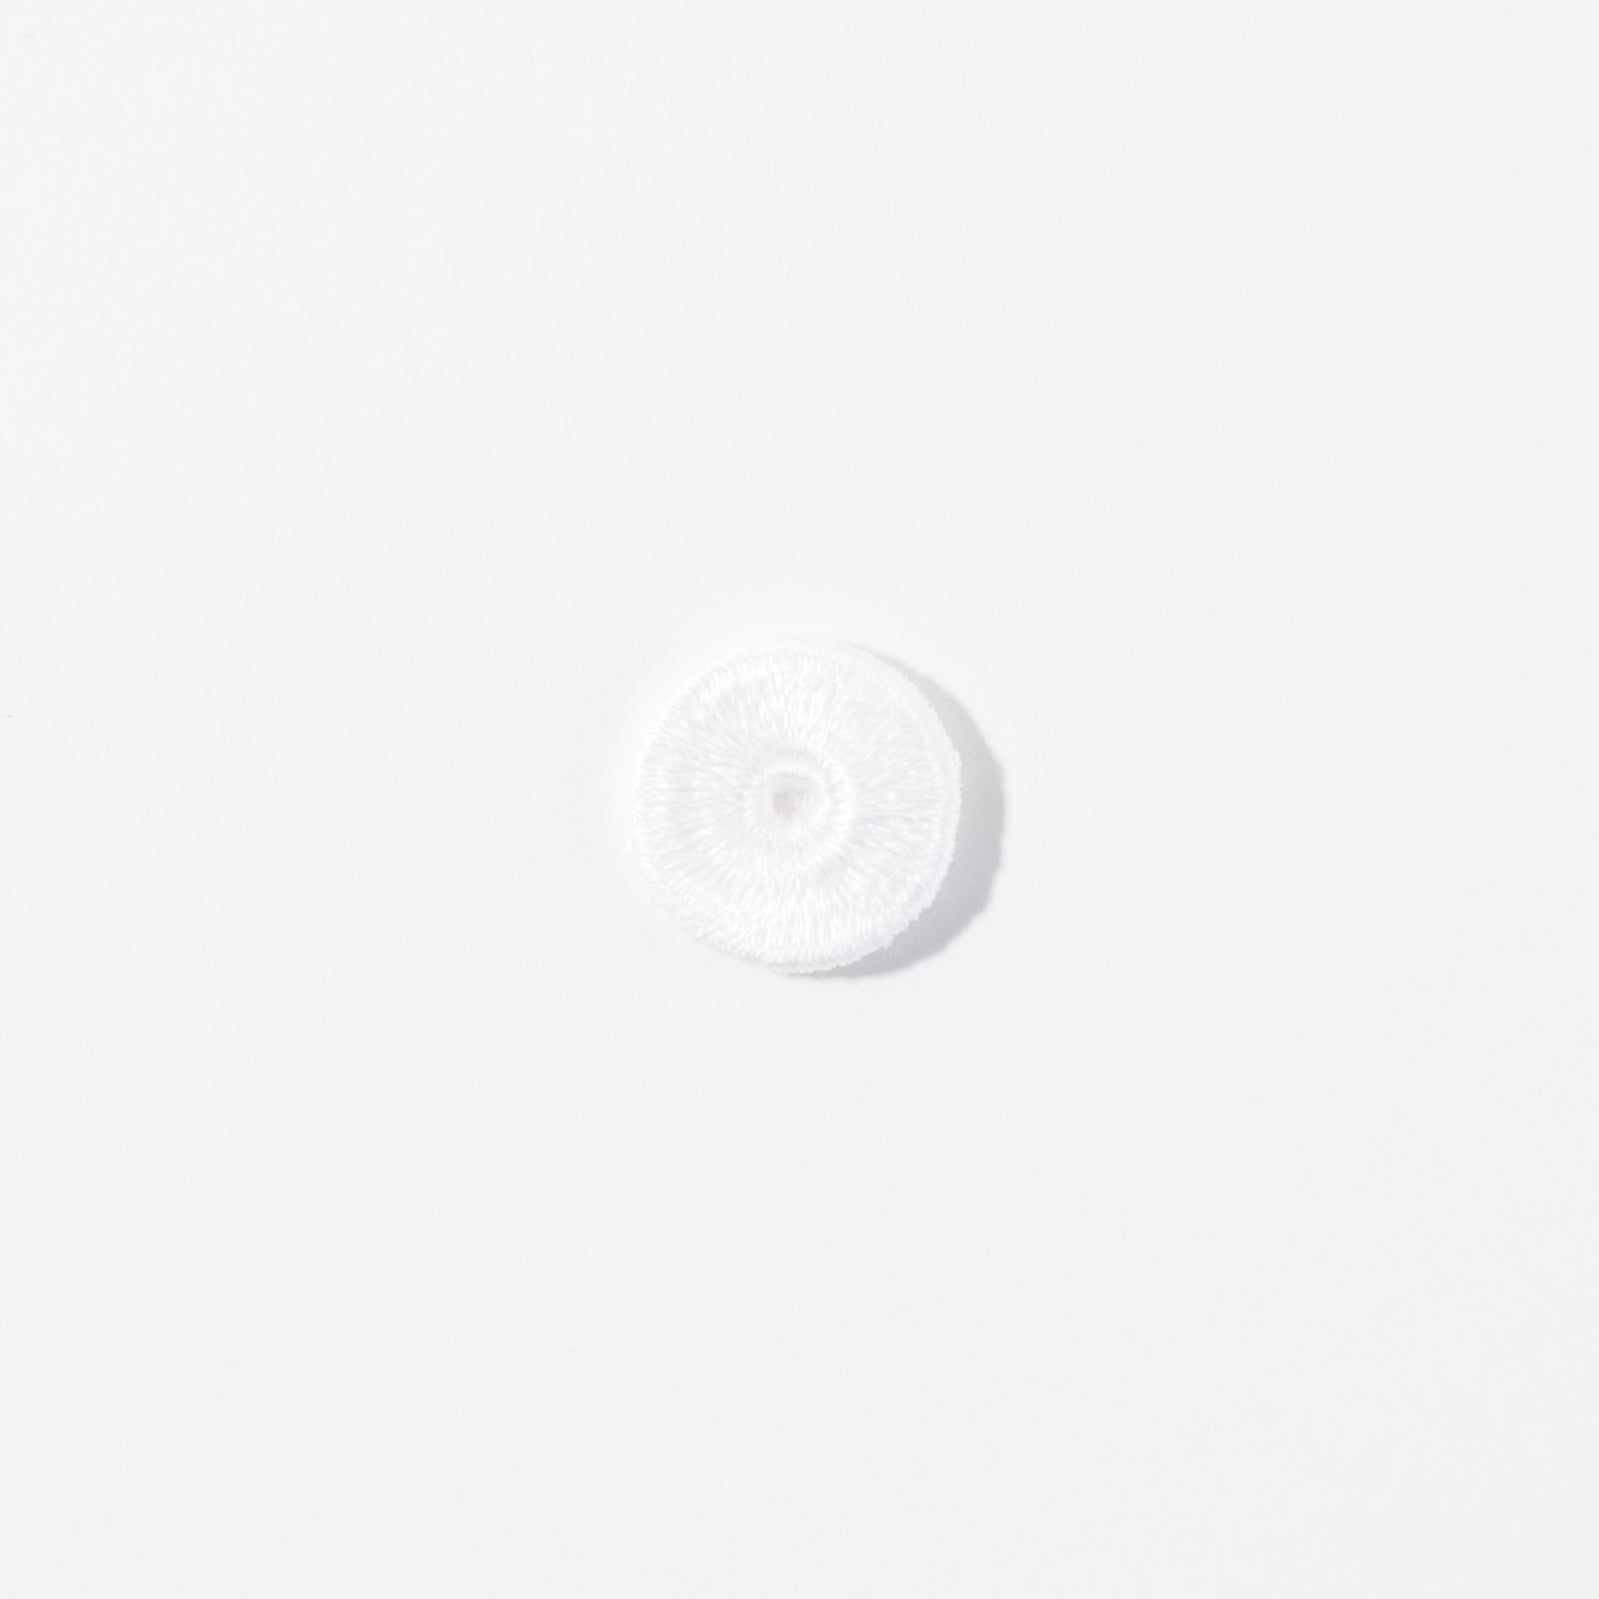 TYPE-1 Circle Washer 10 Pieces (White)